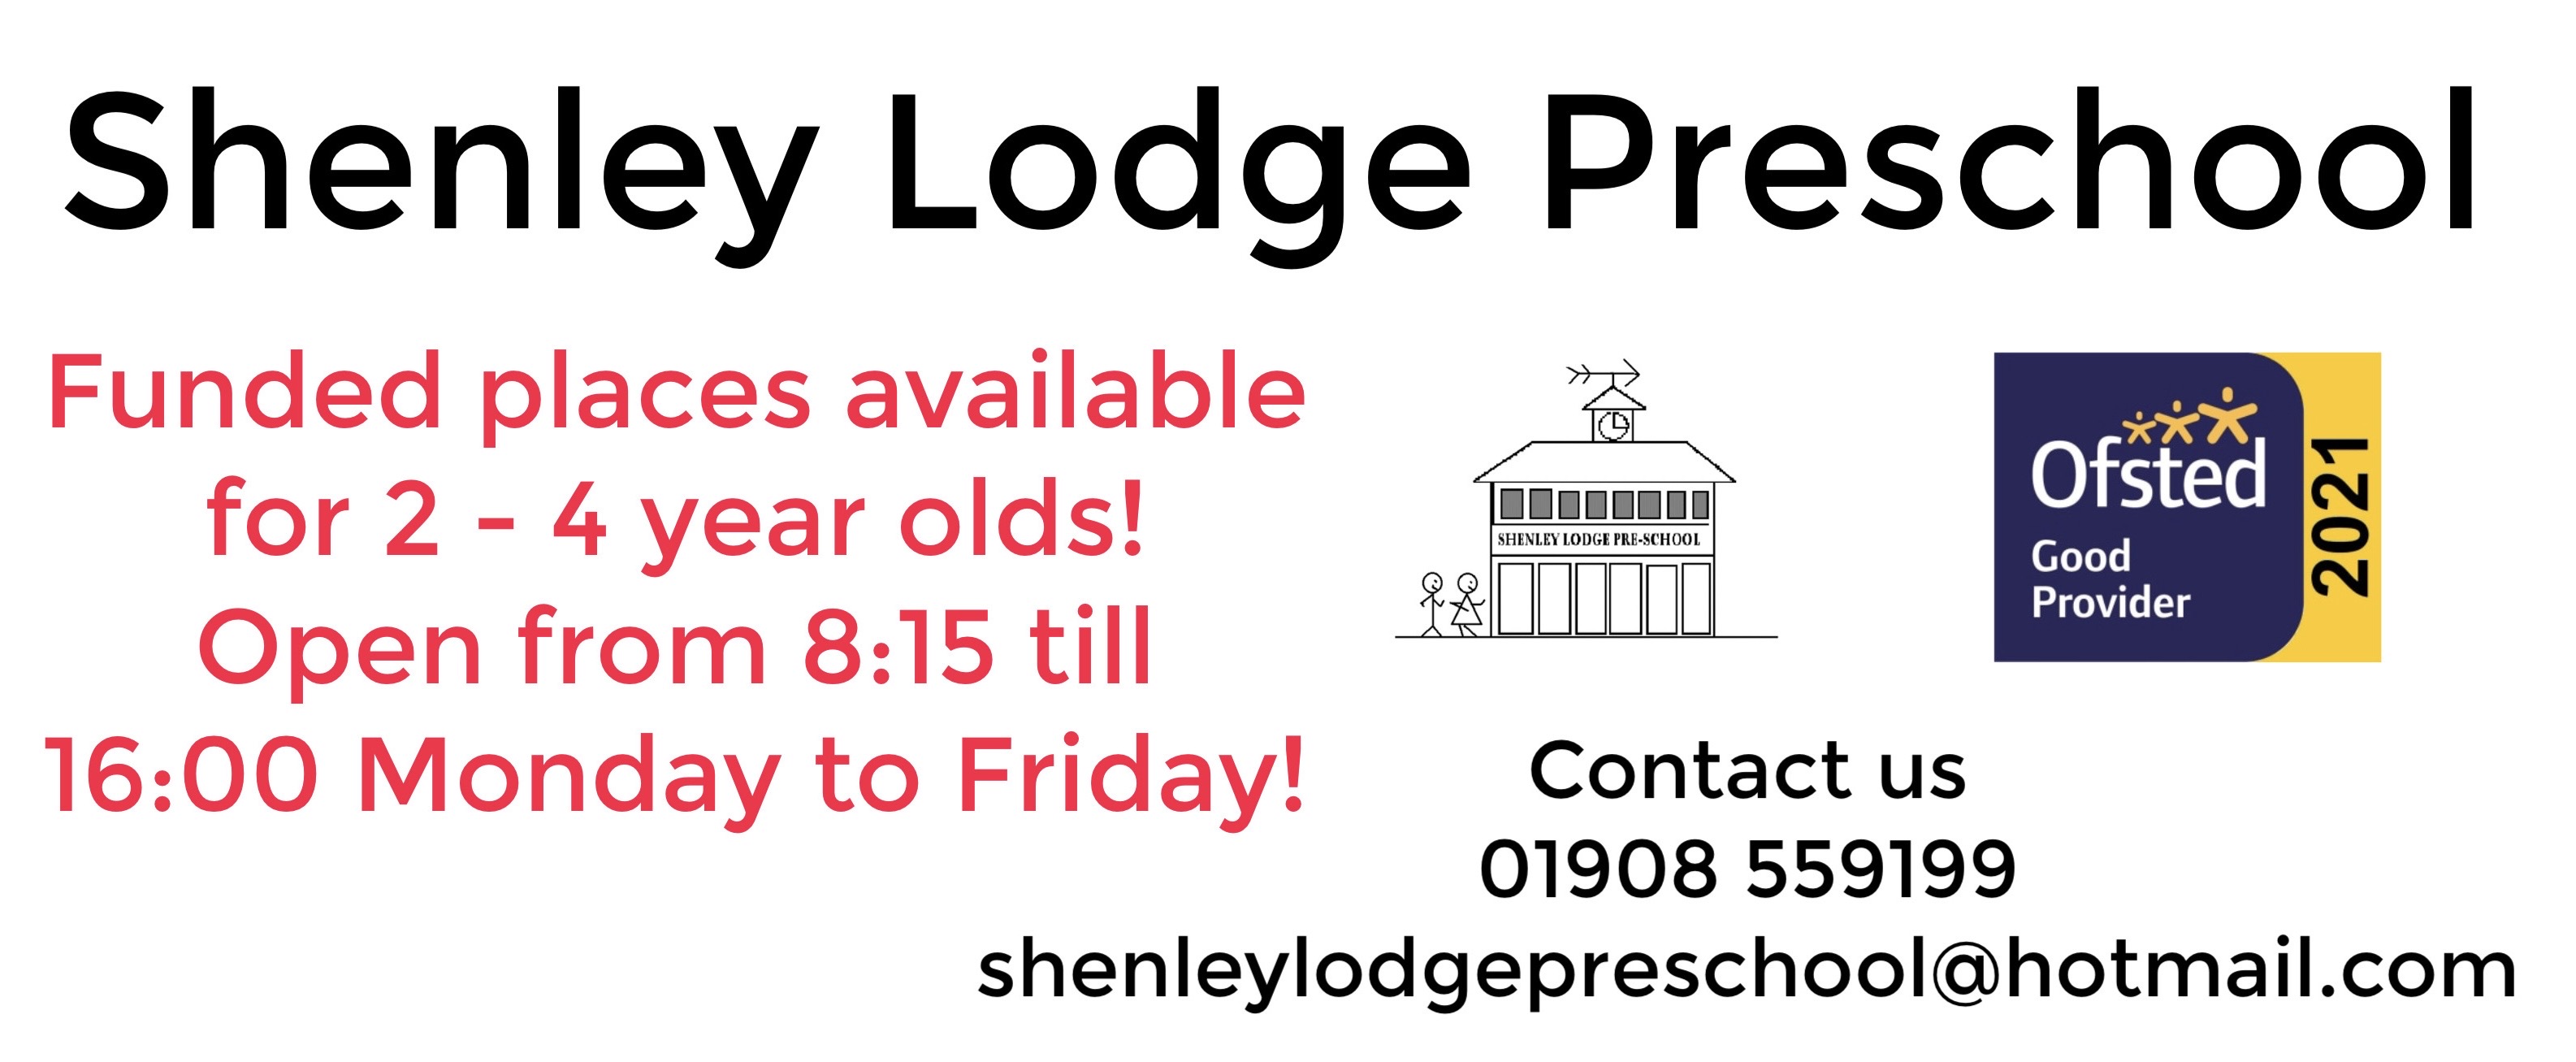 Shenley Lodge Preschool Inc's main image